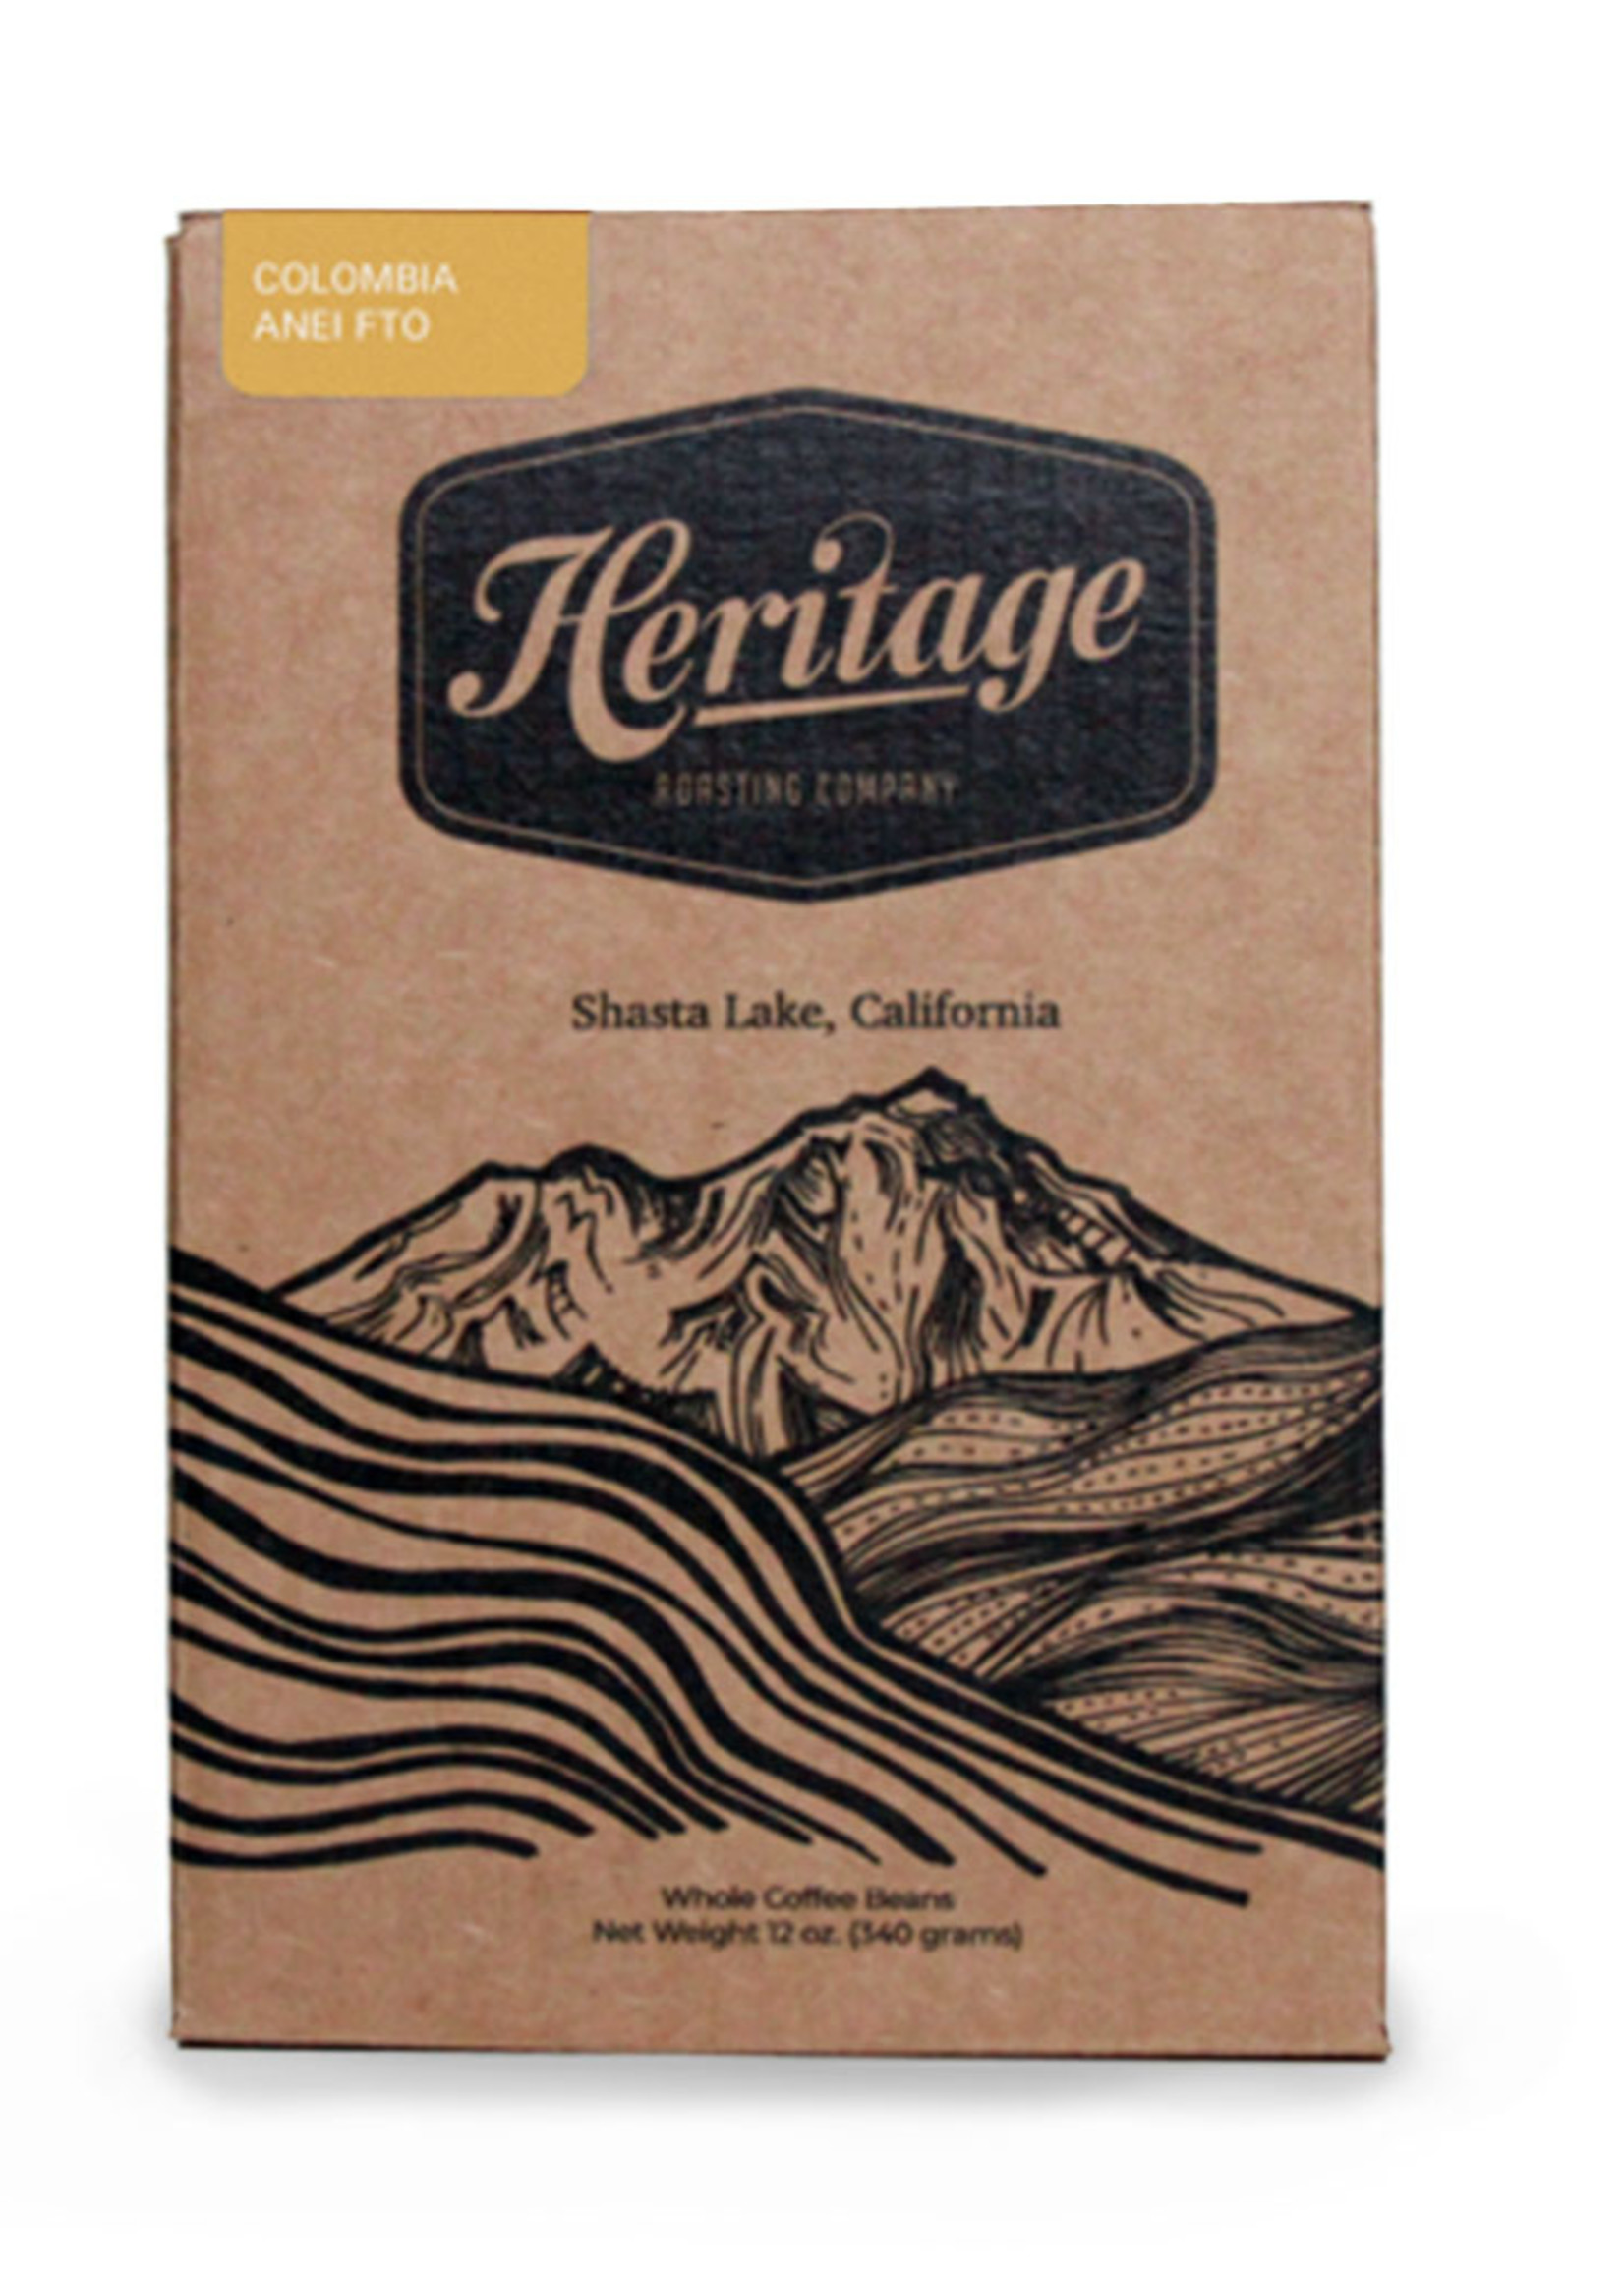 Heritage Roasting Heritage Roasting Company Columbia Anei FTO Coffee Beans 12oz